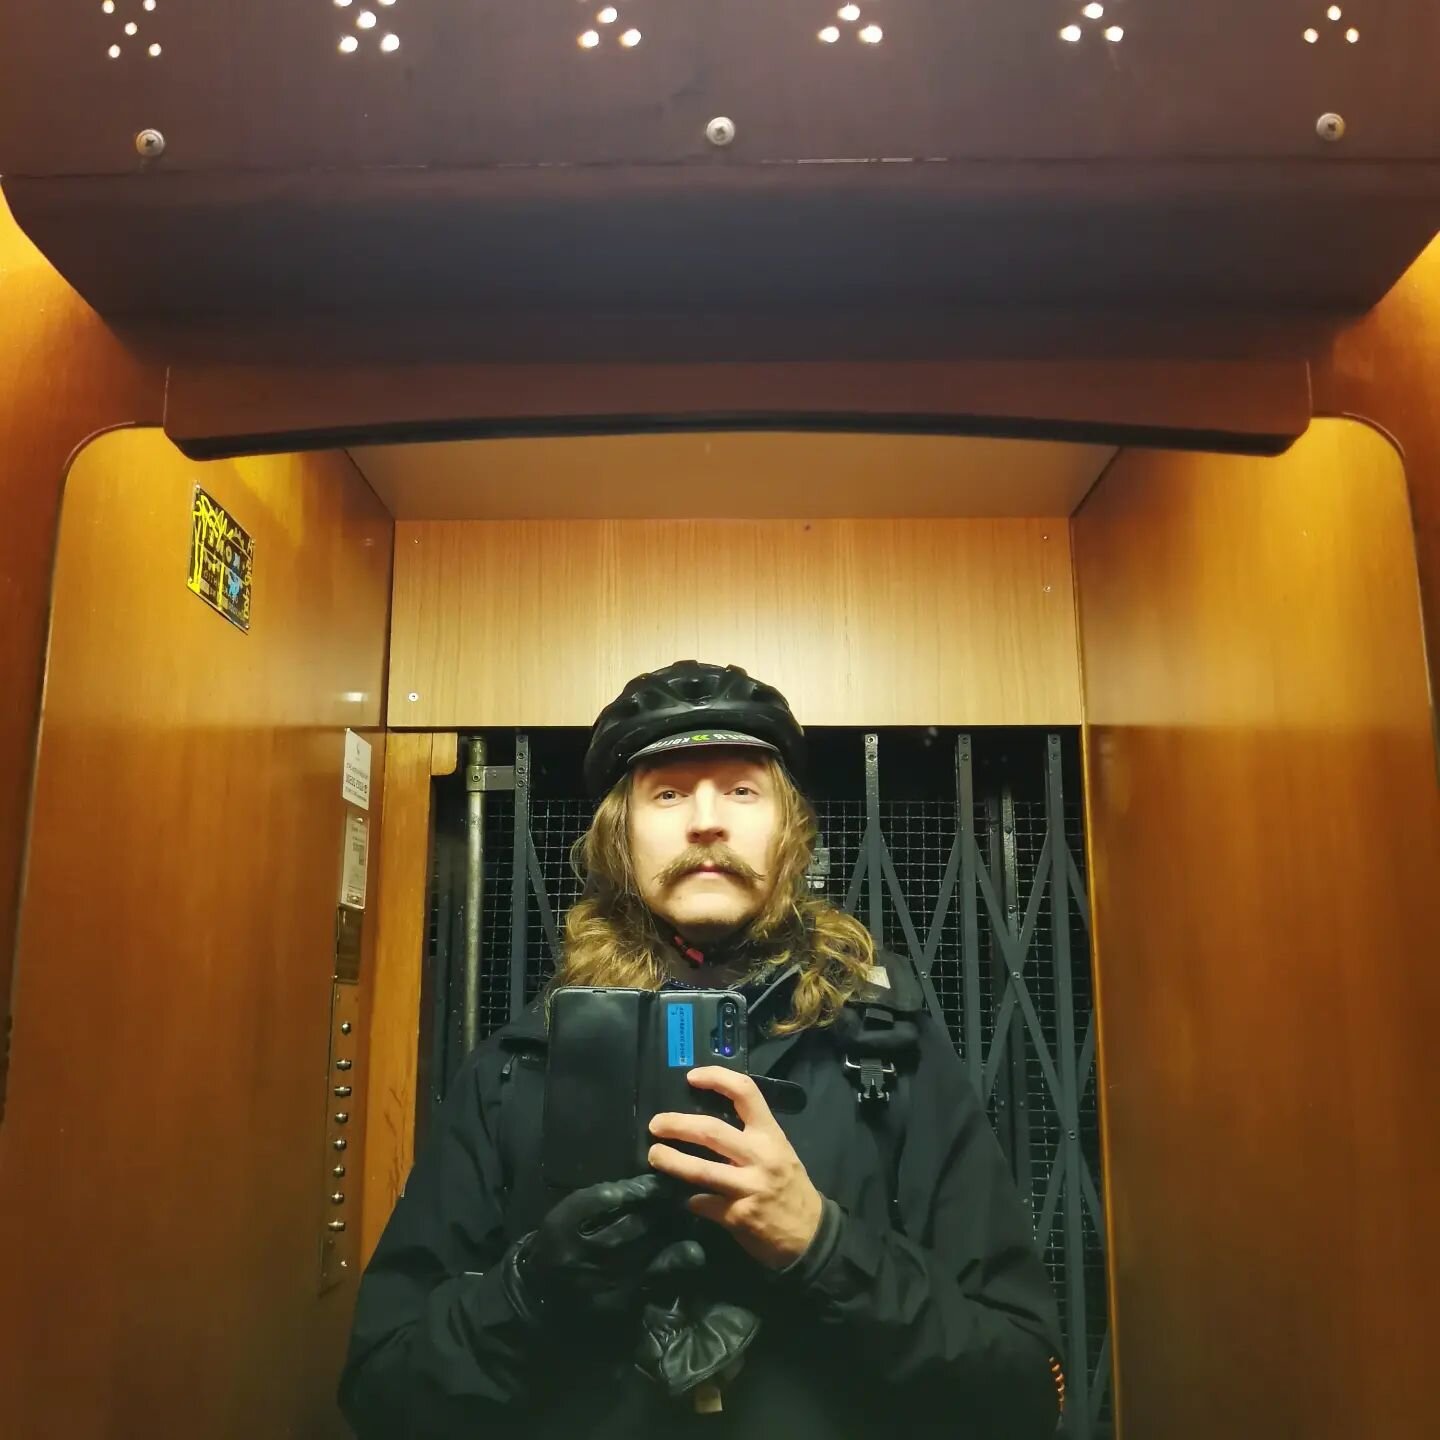 Classic elevator style